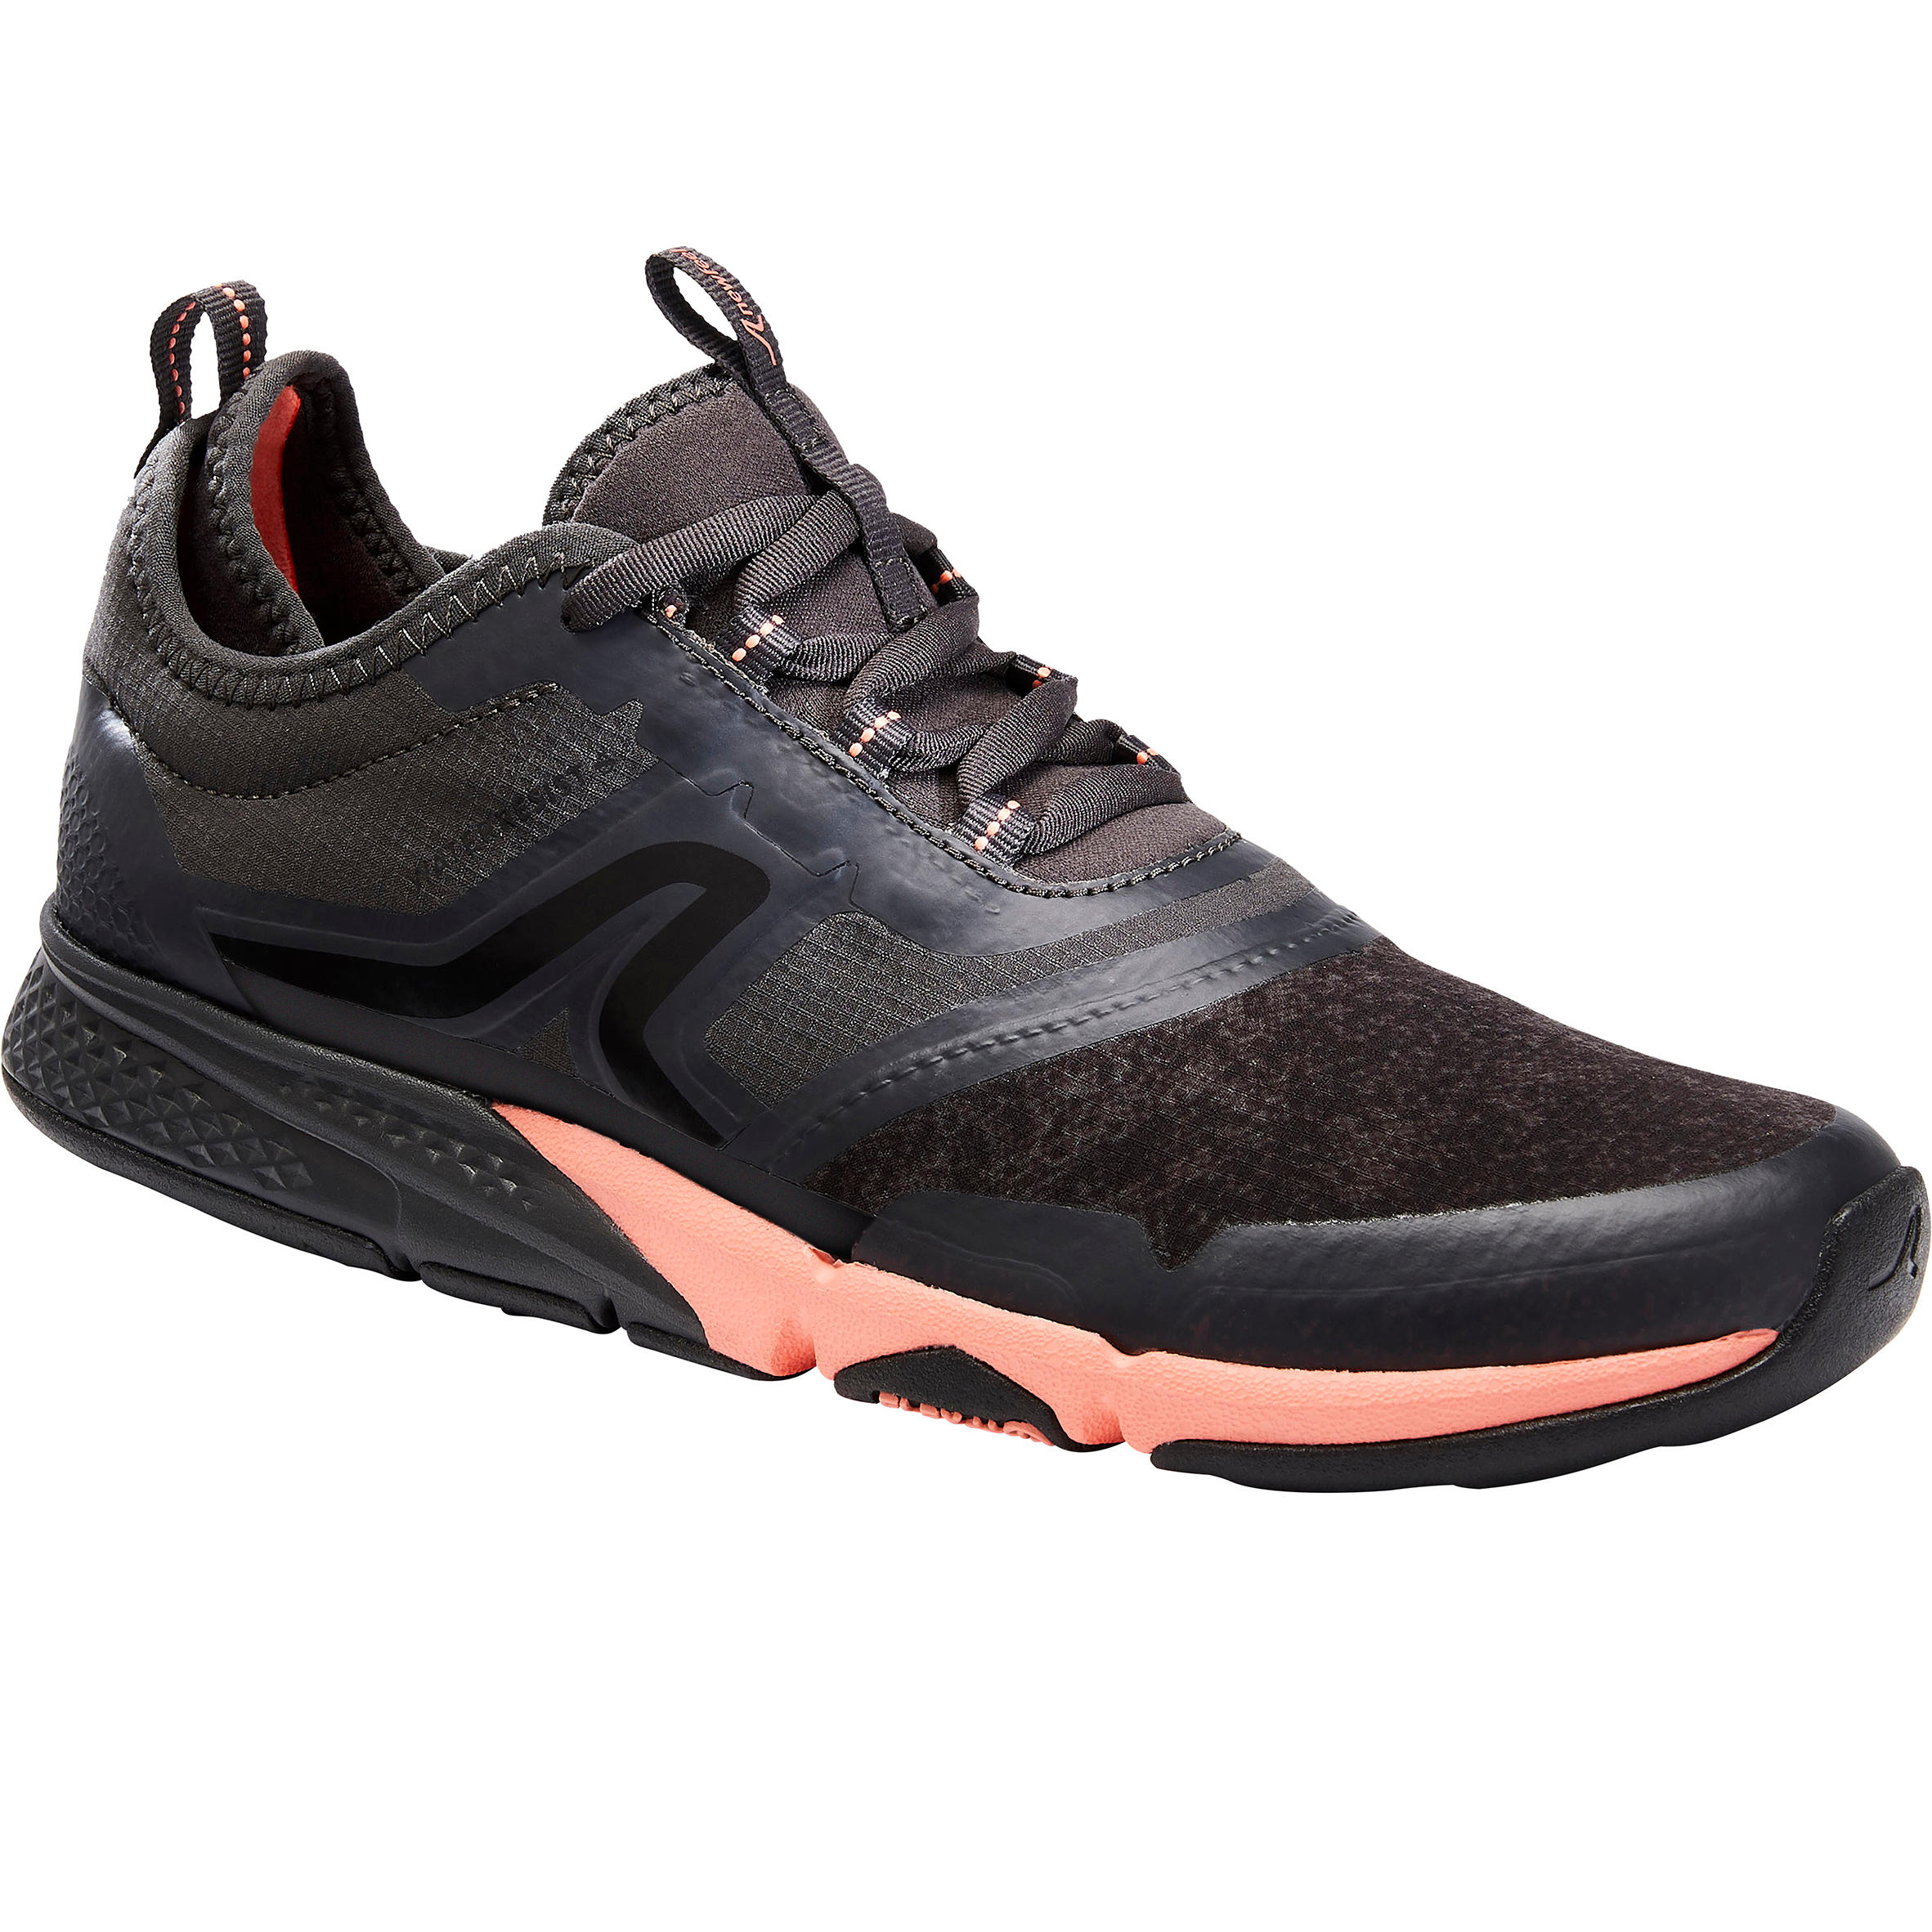 Pw 580 Waterresist Women's Fitness Walking Shoes Grey/coral